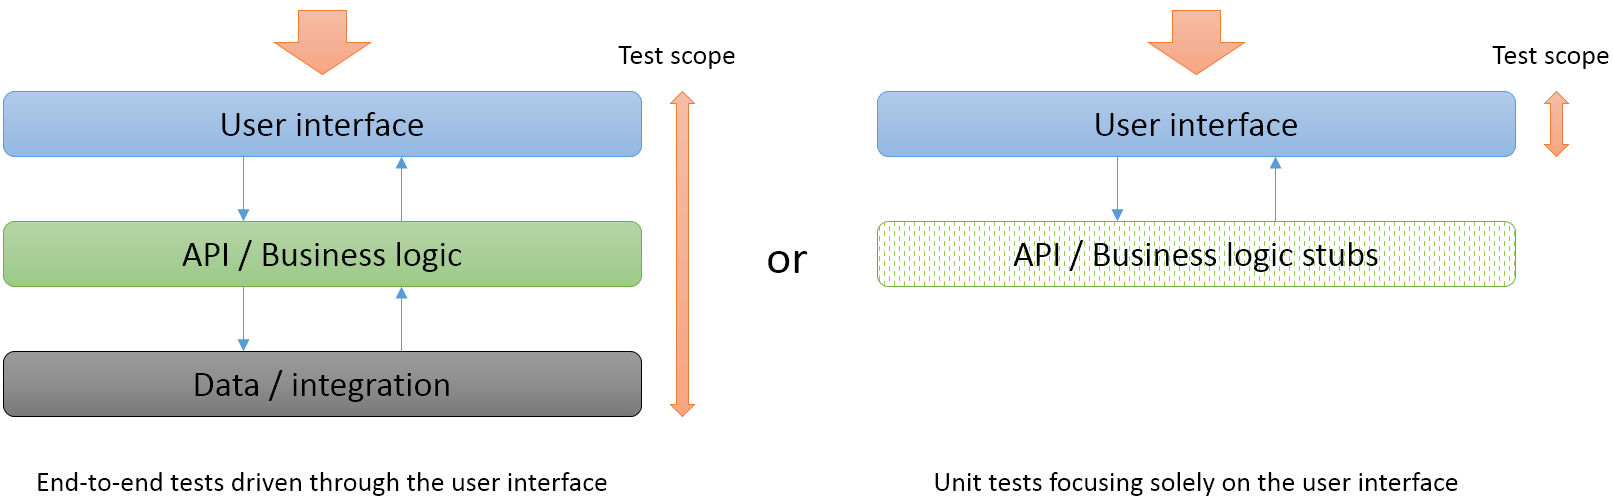 Testing the user interface versus testing through the user interface